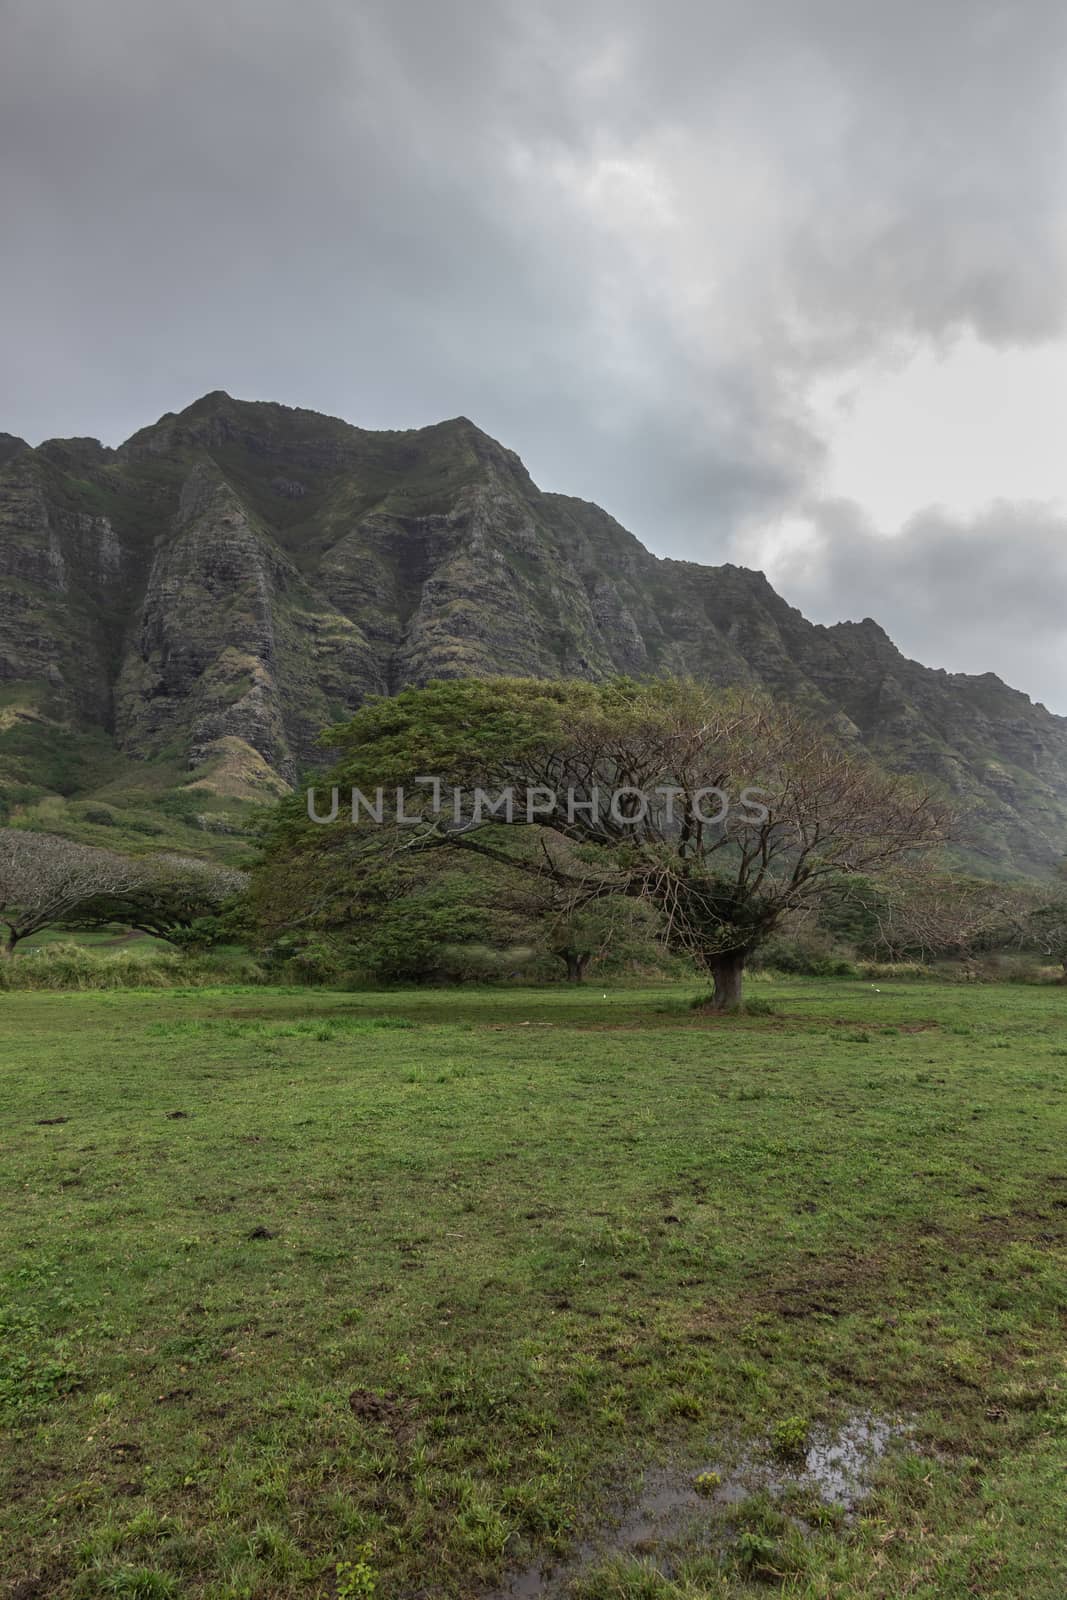 Kaaawa, Oahu, Hawaii, USA. - January 11, 2020: green Portrait with meadow and Koa tree in front of tall brown rocky cliffs under gray cloudscape near Kualoa Ranch area.